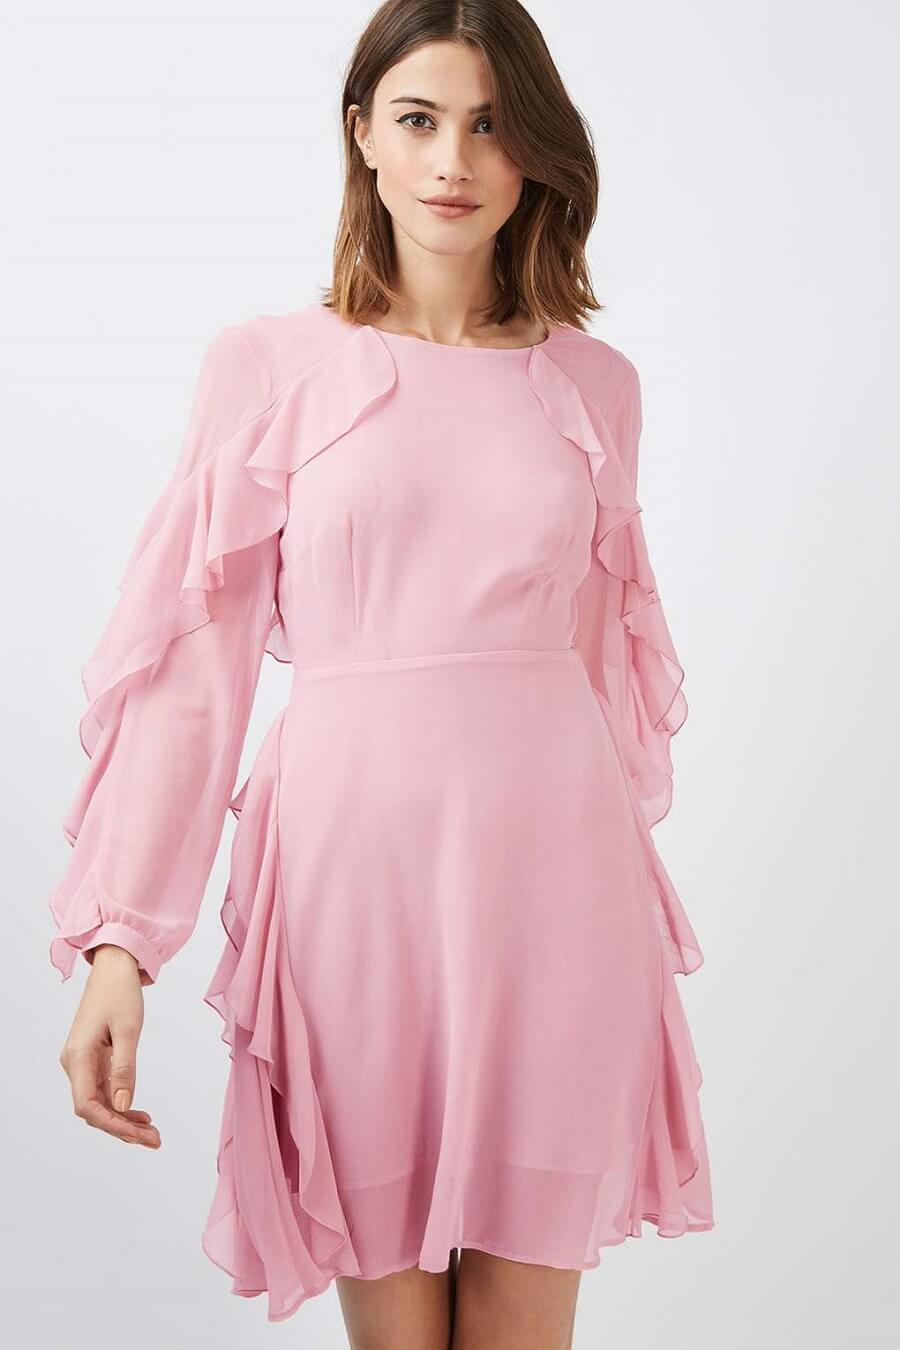 woman wearing a light pink frilly dress